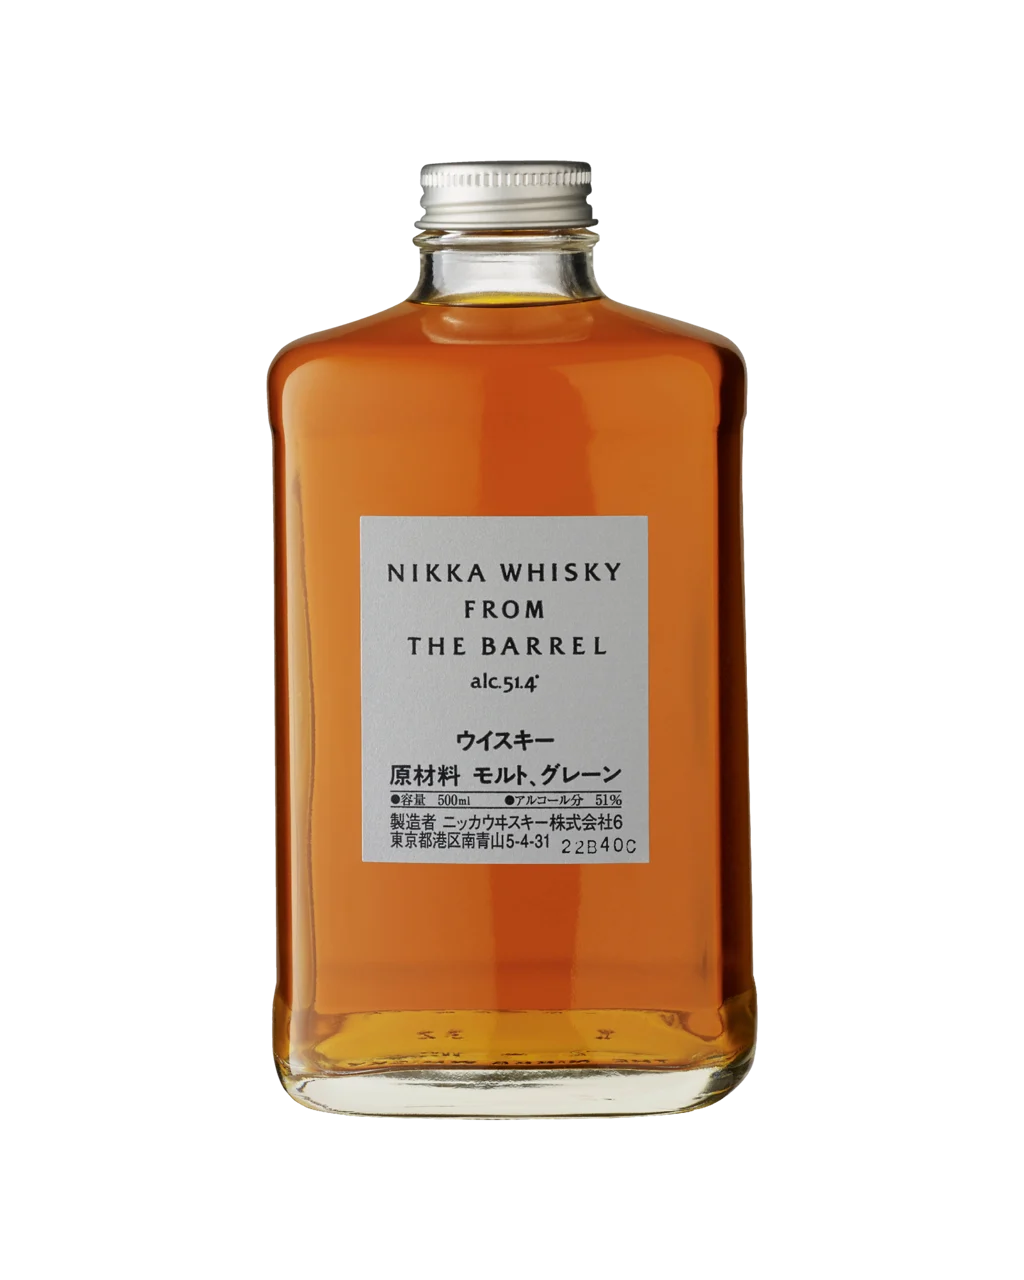 Nikka "From The Barrel" Japanese Whisky